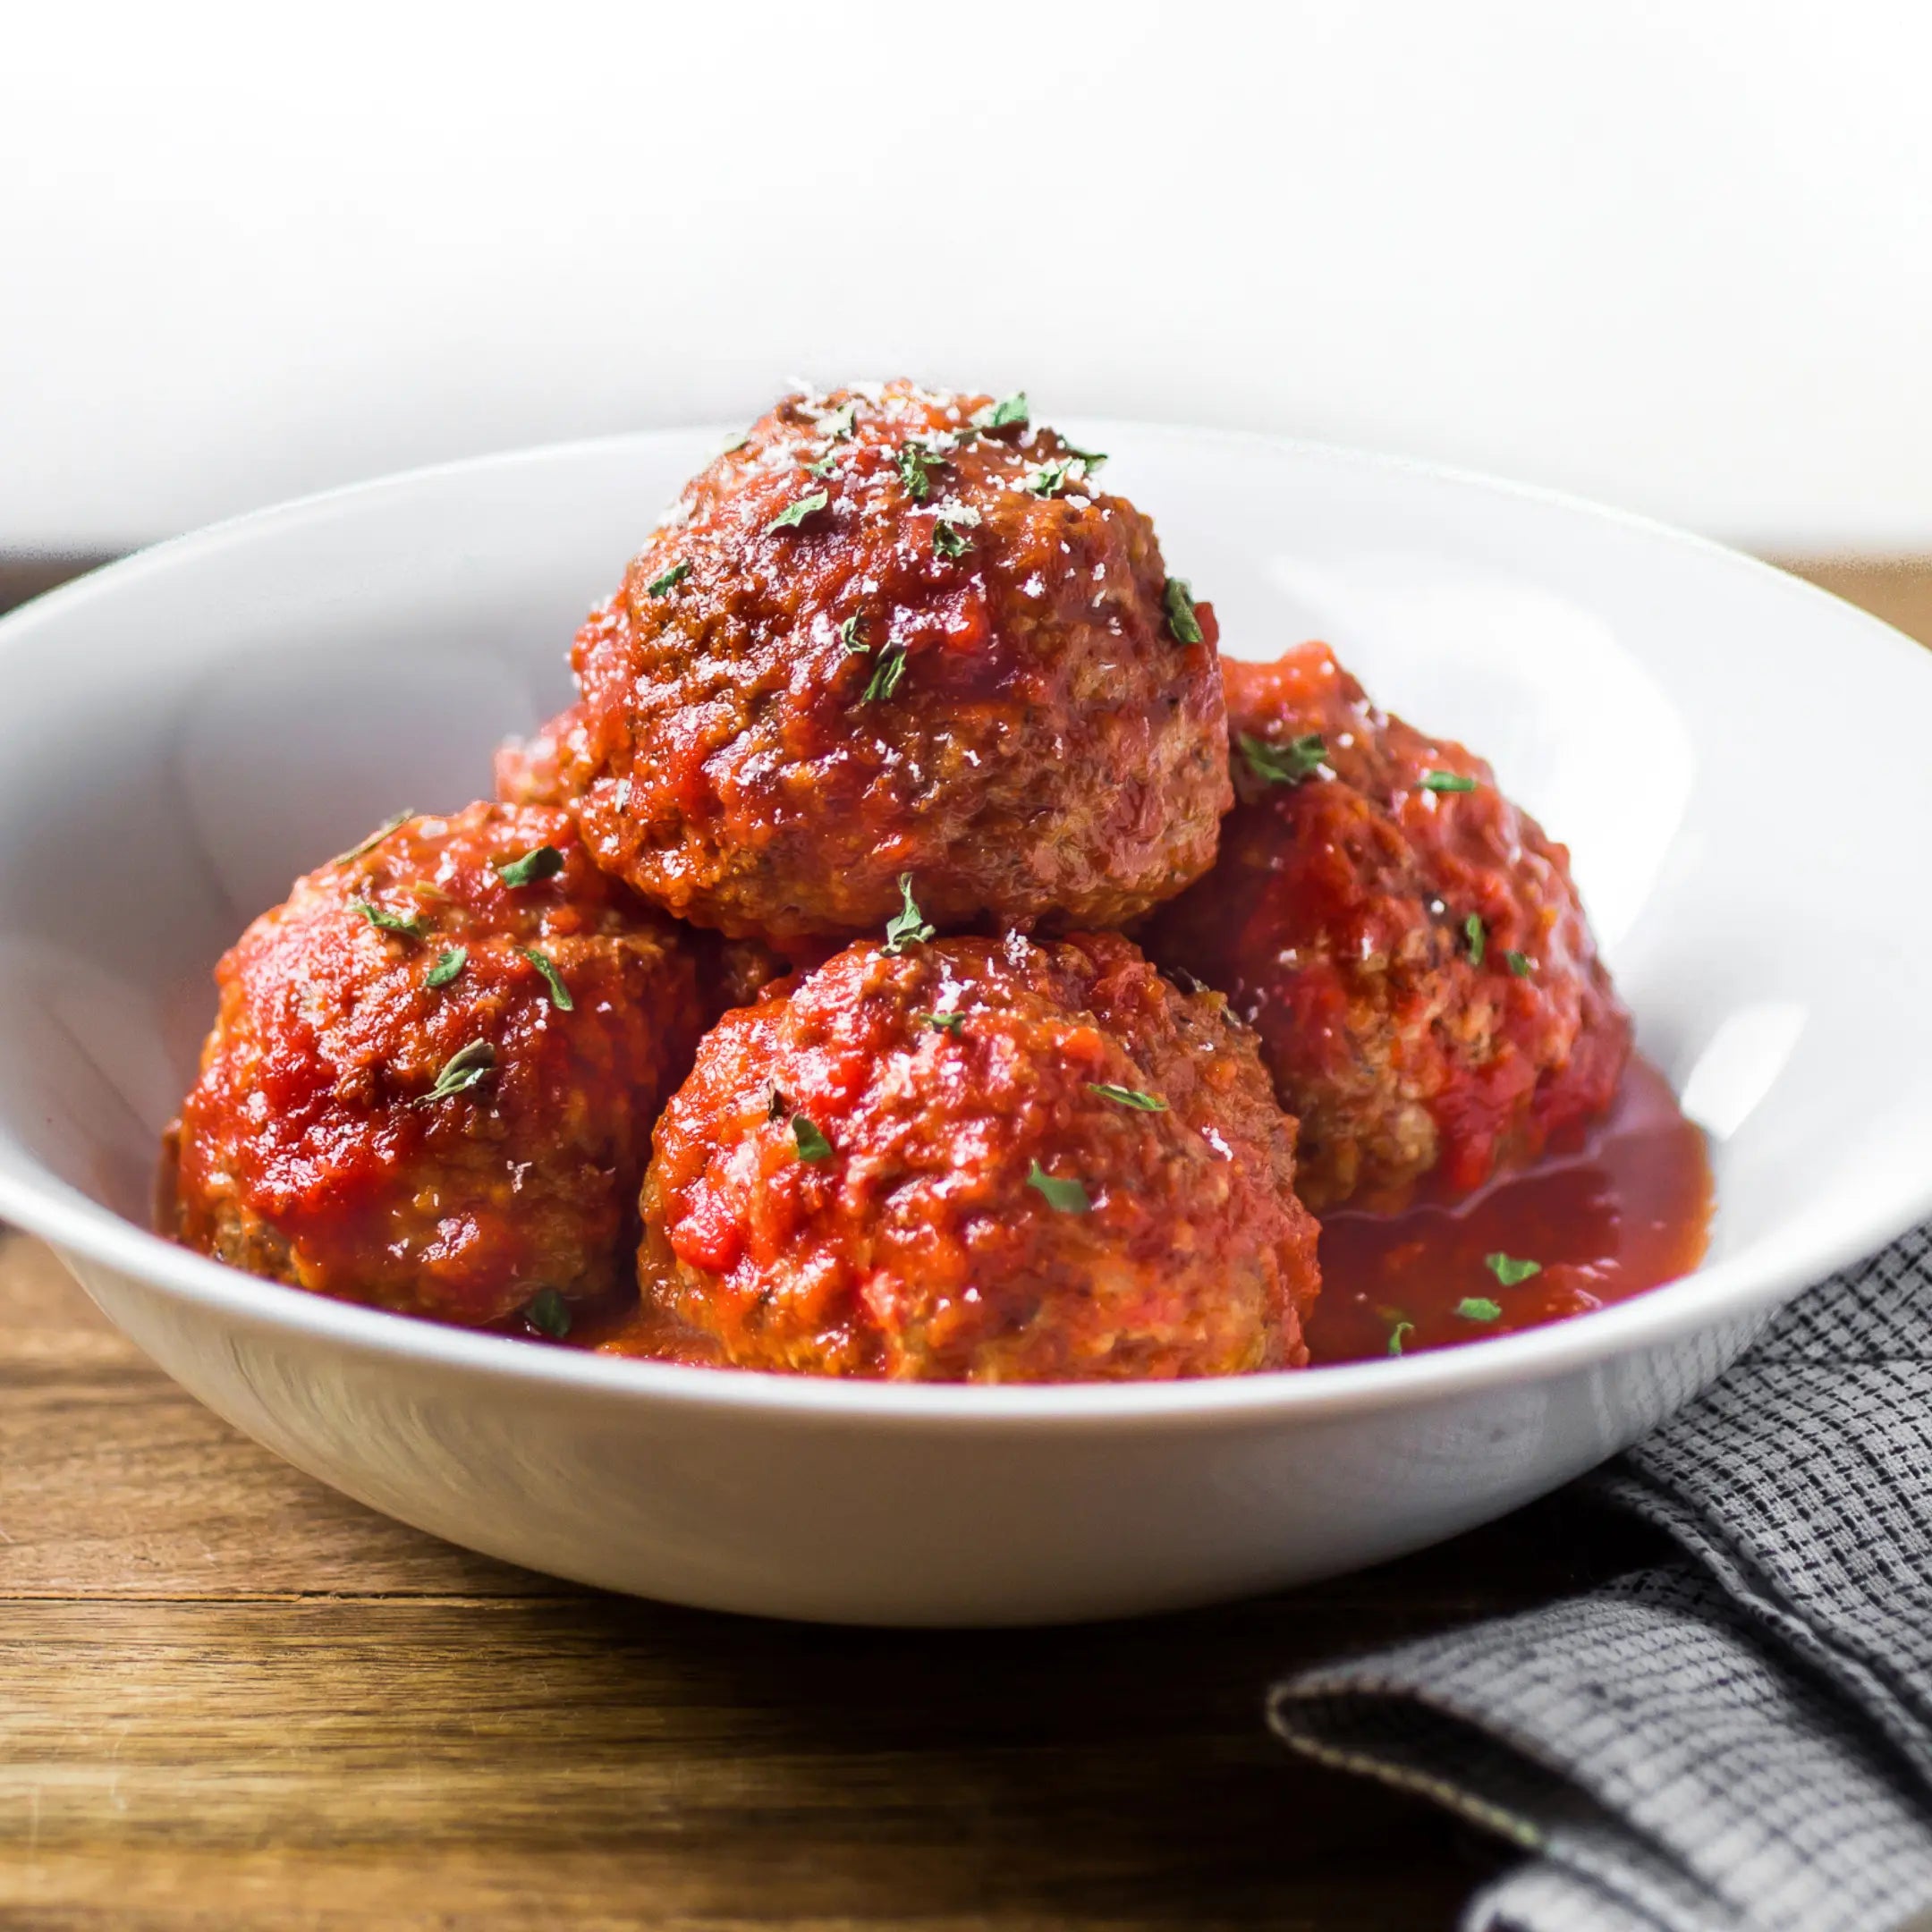 Jumbo Beef Meatballs in Italian Style Sauce (3 x 3lb Family Meals)